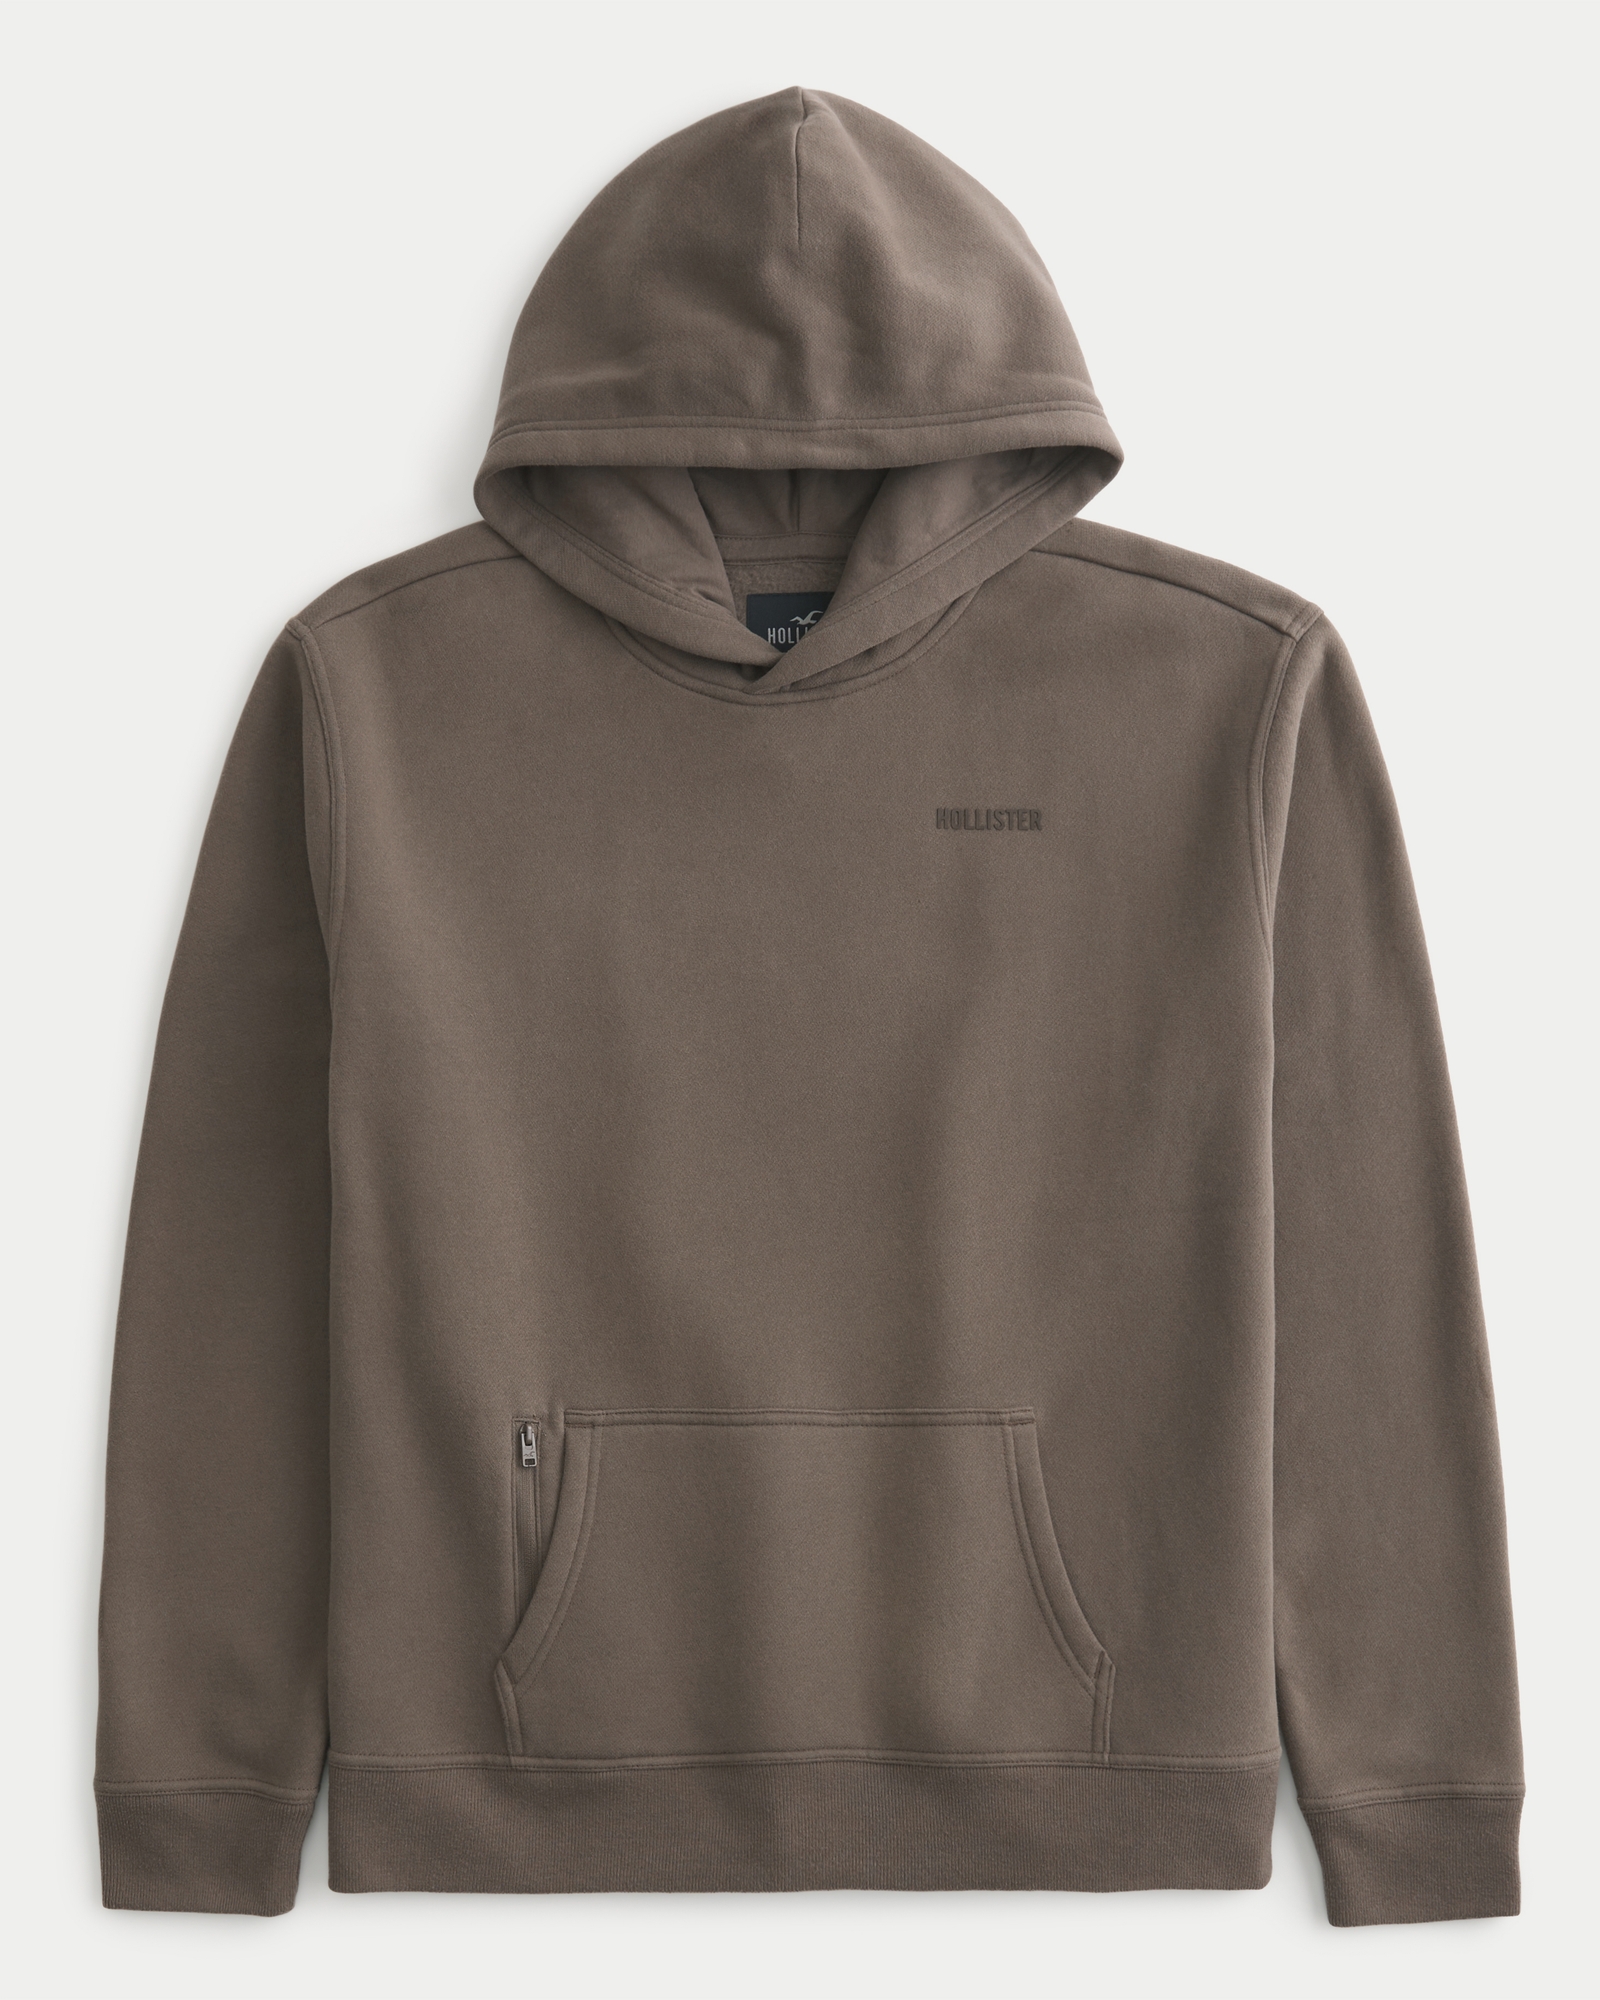 Hollister glow in the dark sleeve and back print logo hoodie in